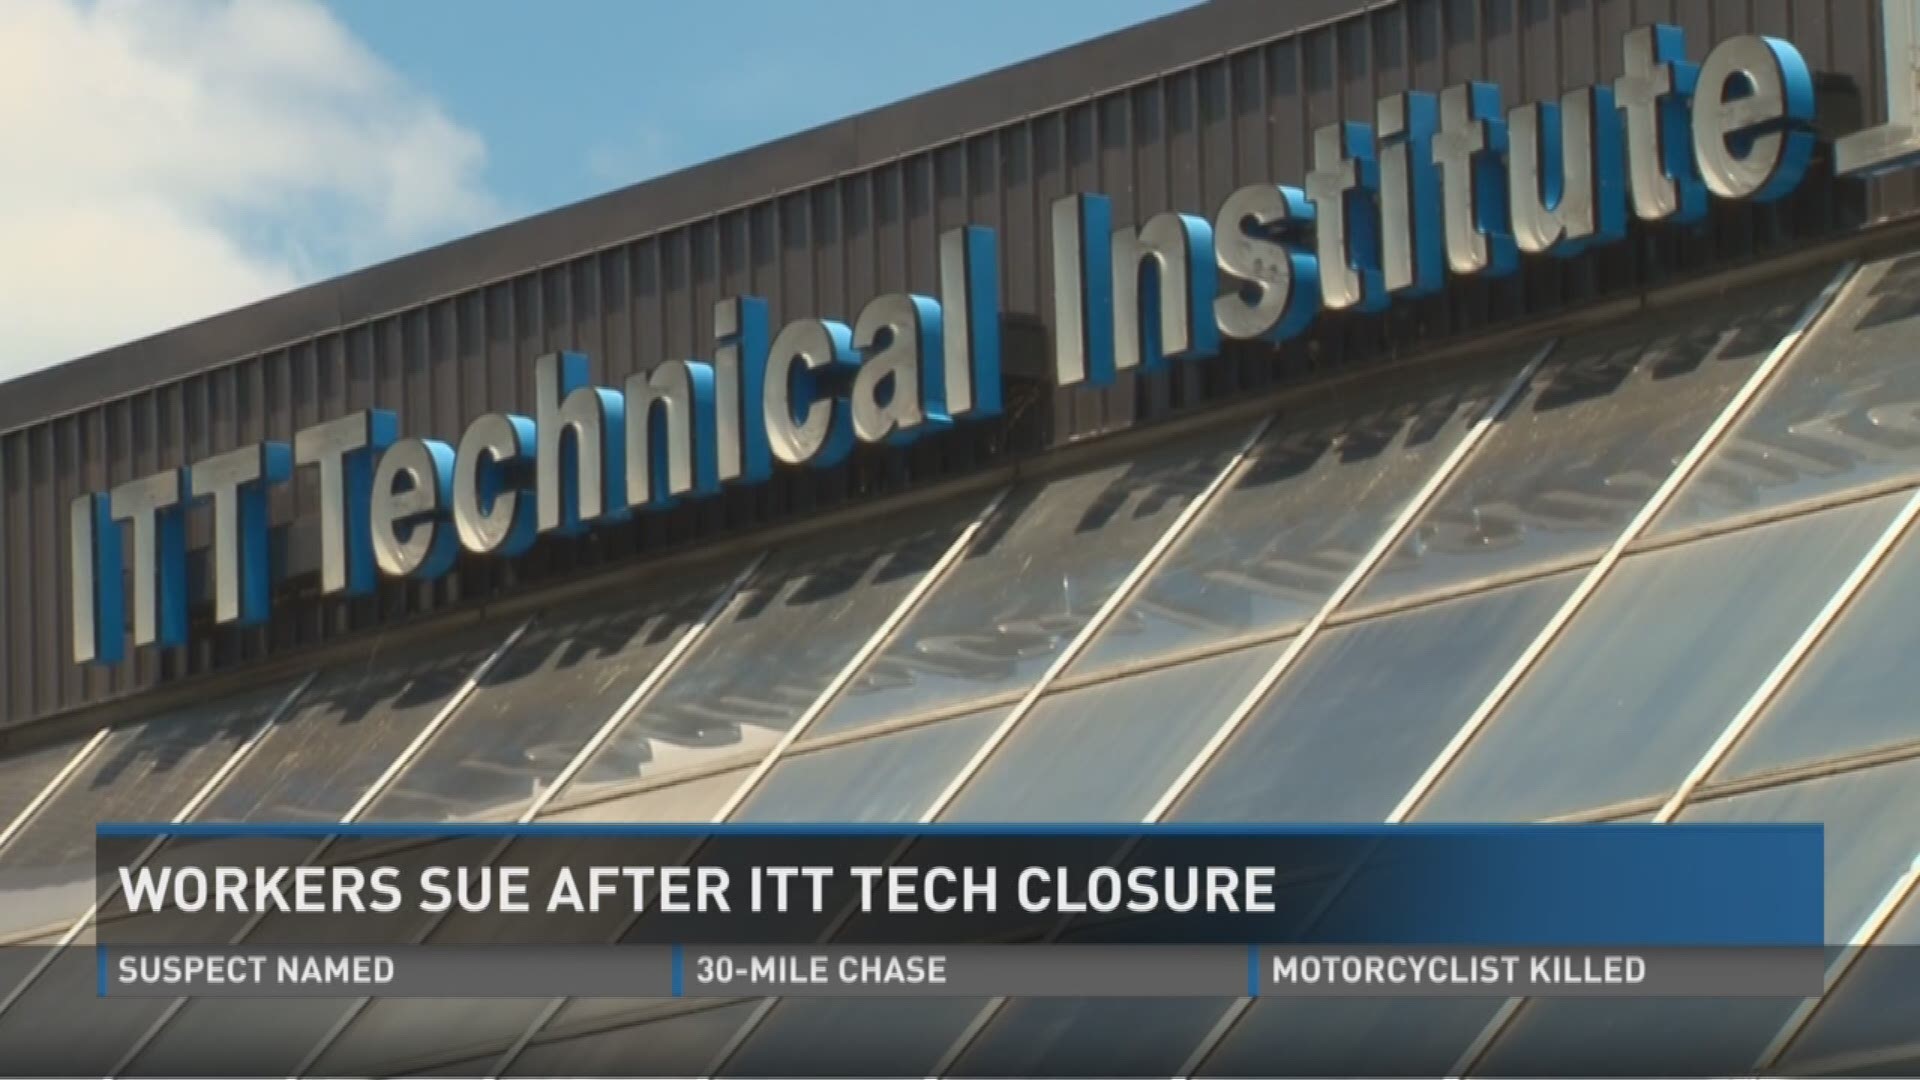 Workers sue after ITT Tech closure.